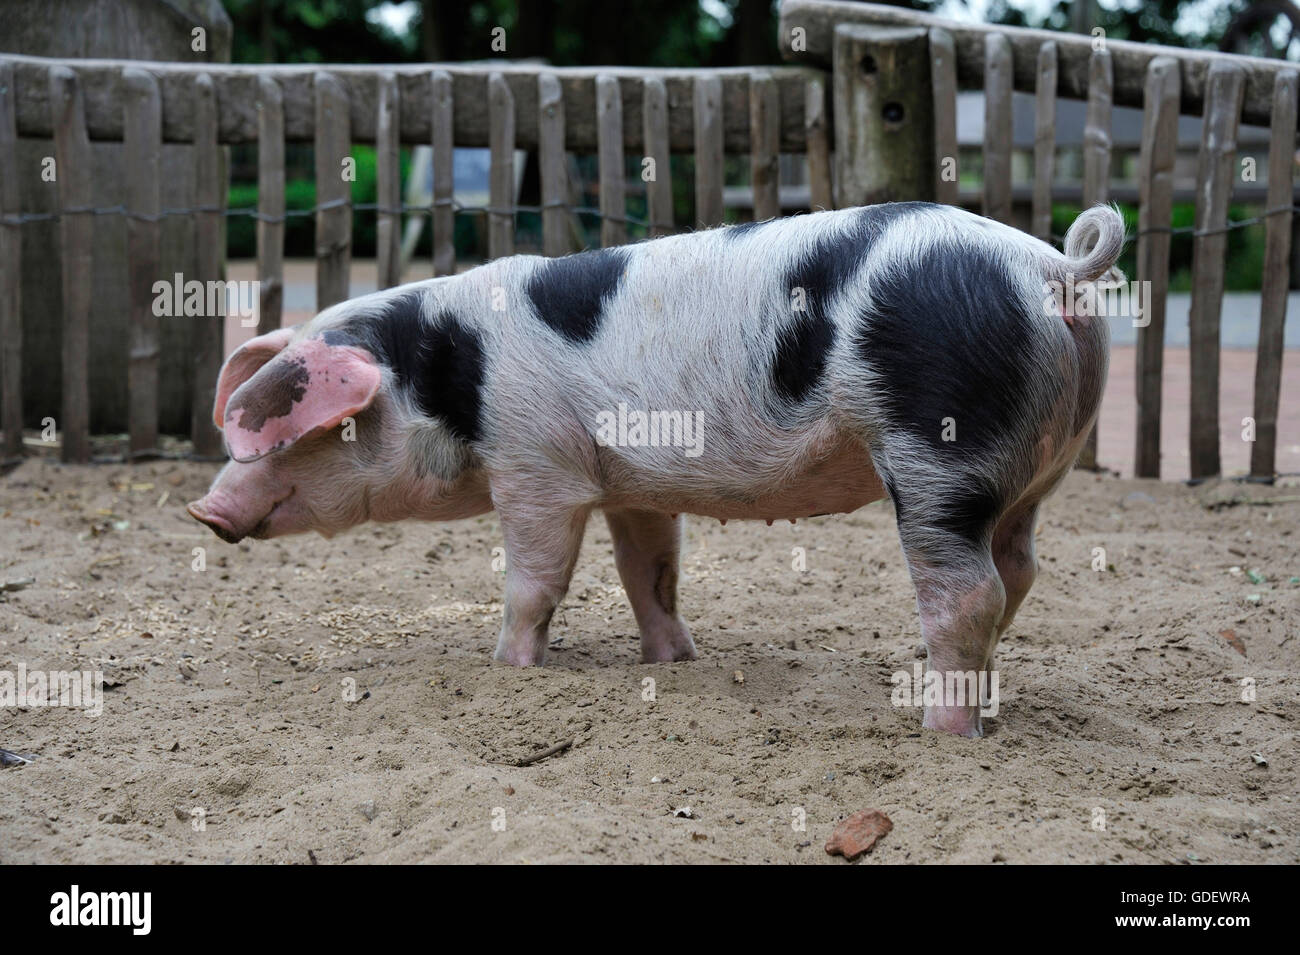 Bentheimer pig, animal park Nordhorn, Nordhorn, Lower Saxony, Germany Stock Photo